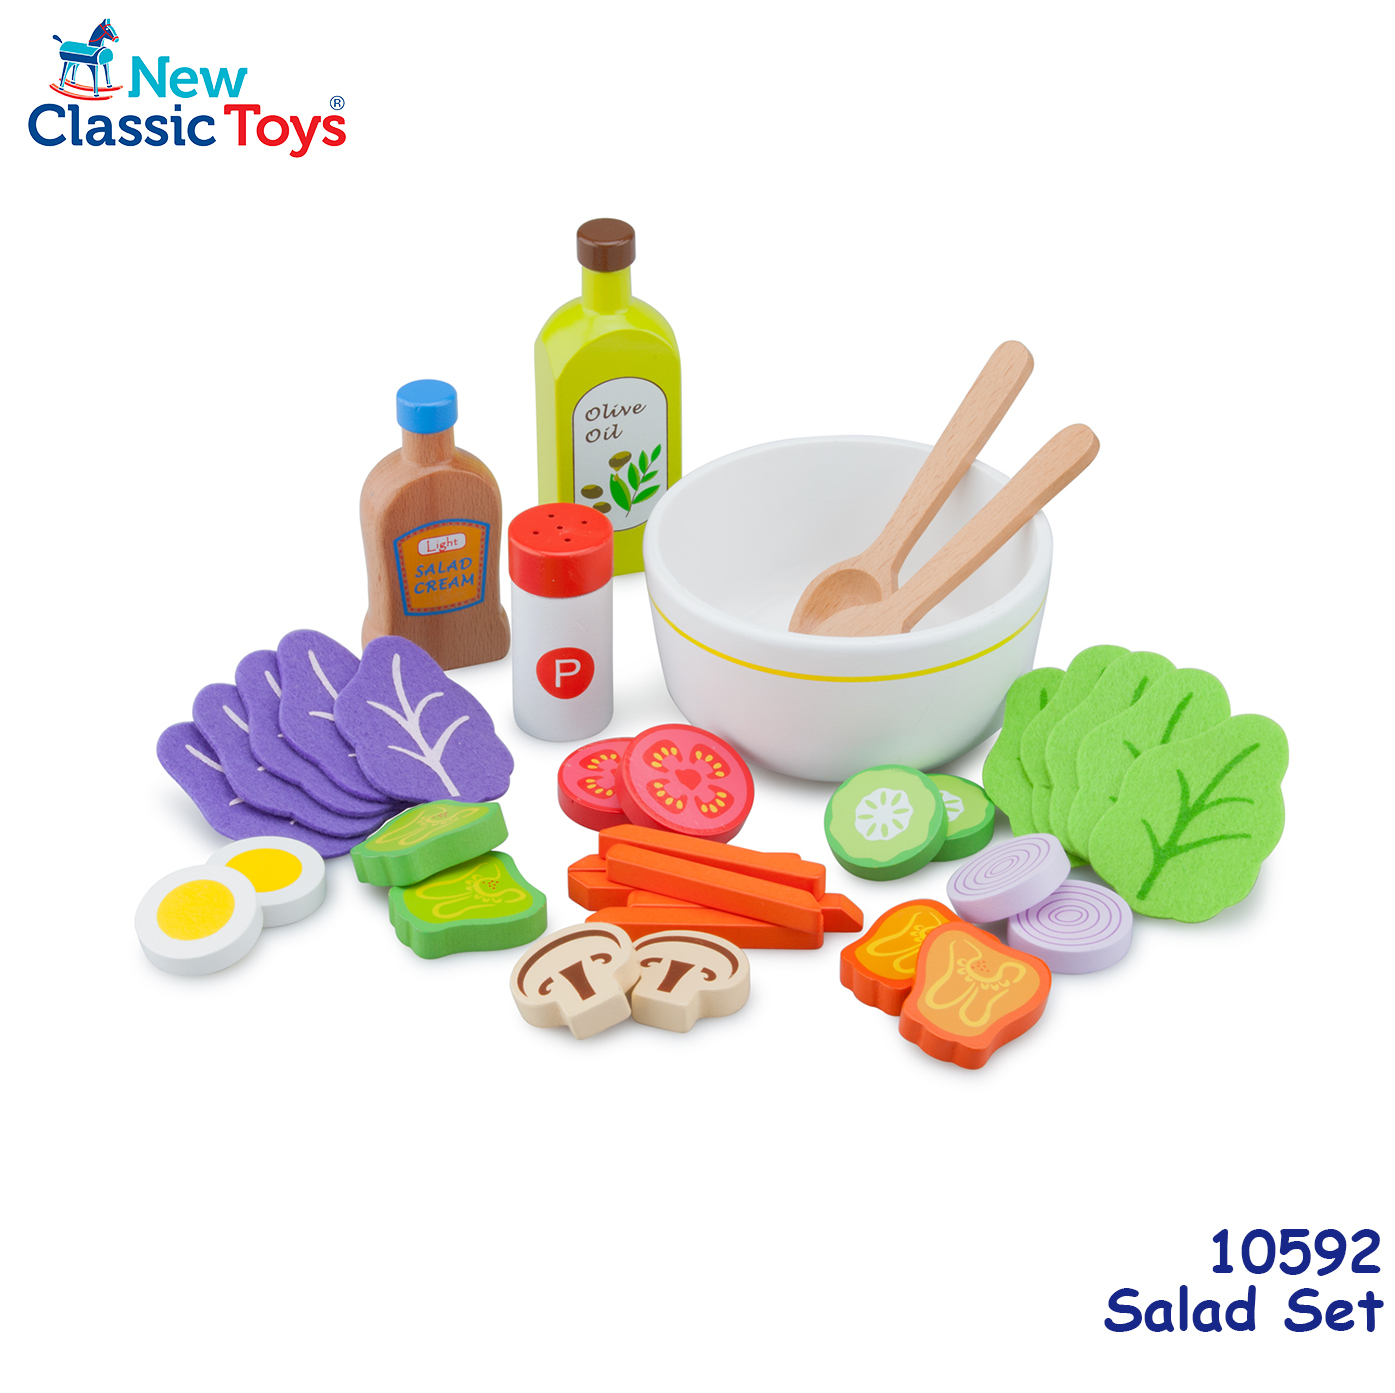 New Classic Toys - Salad Set 木製沙律套餐玩具 #10592 1